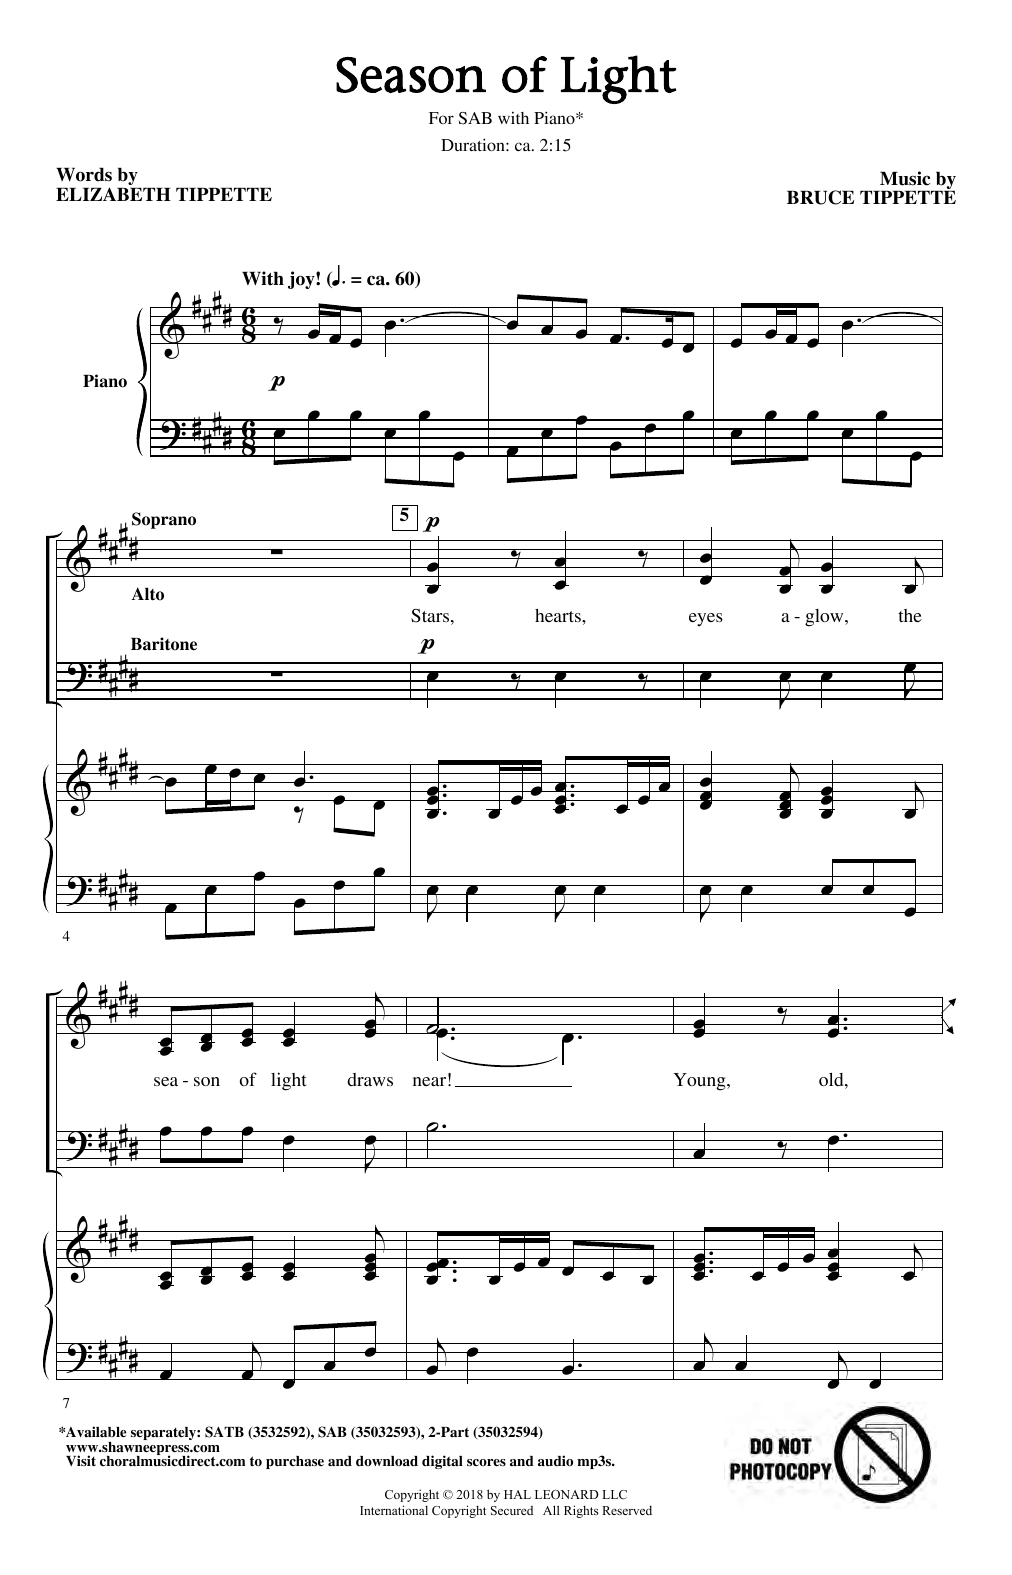 Bruce Tippette & Elizabeth Tippette Season Of Light Sheet Music Notes & Chords for SAB Choir - Download or Print PDF